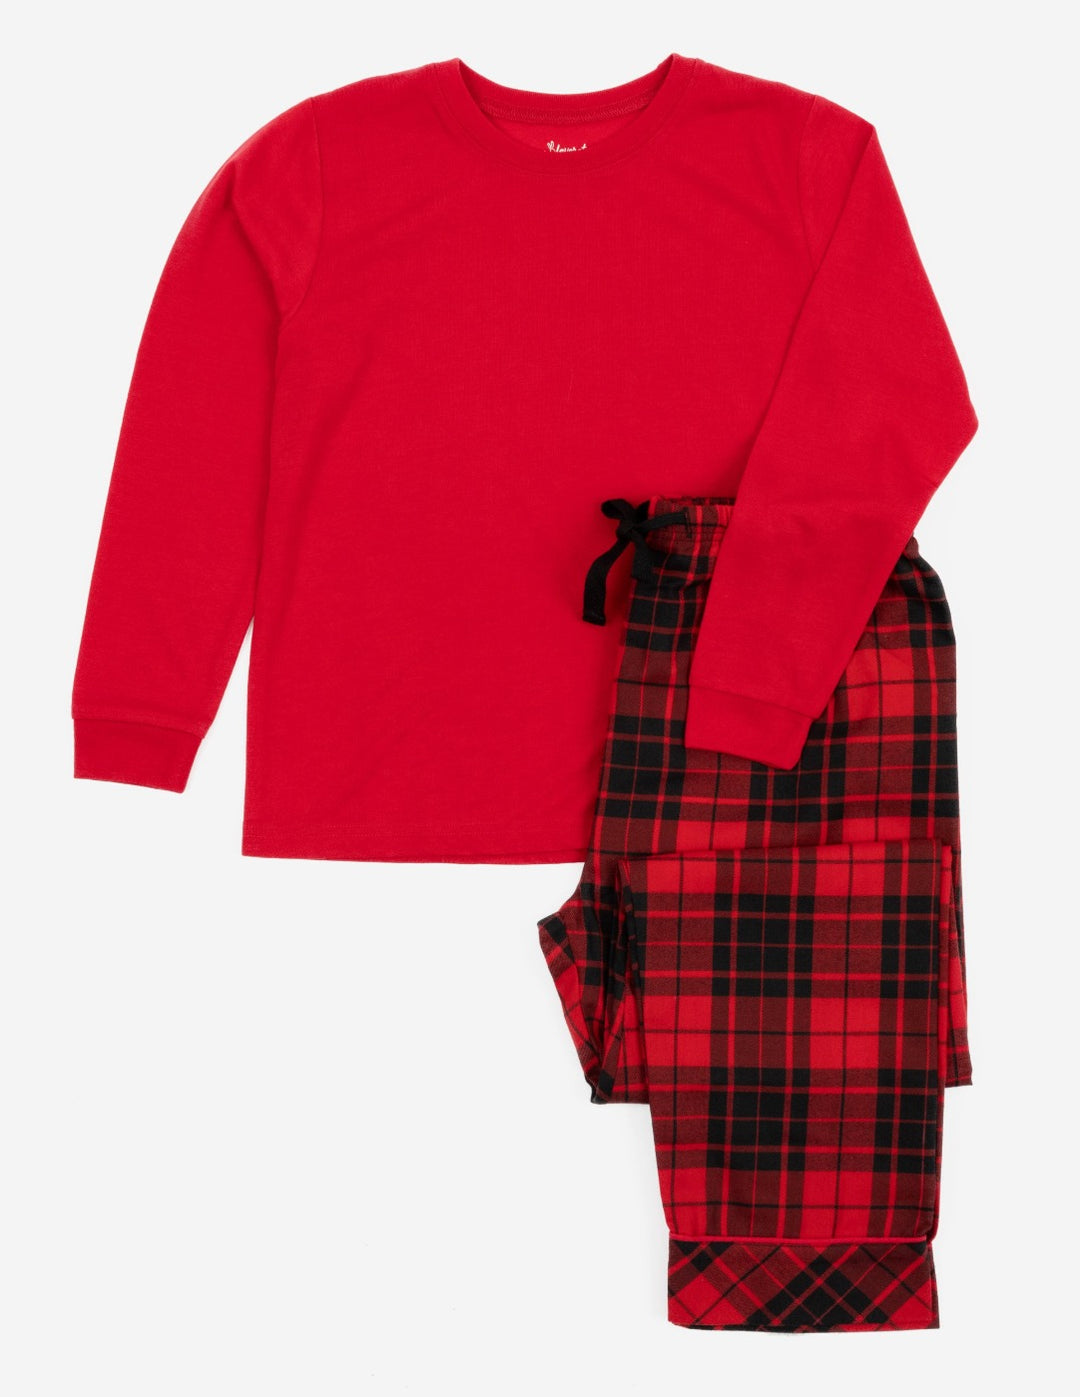 Women's Red & Black Plaid Flannel Pajama Sets